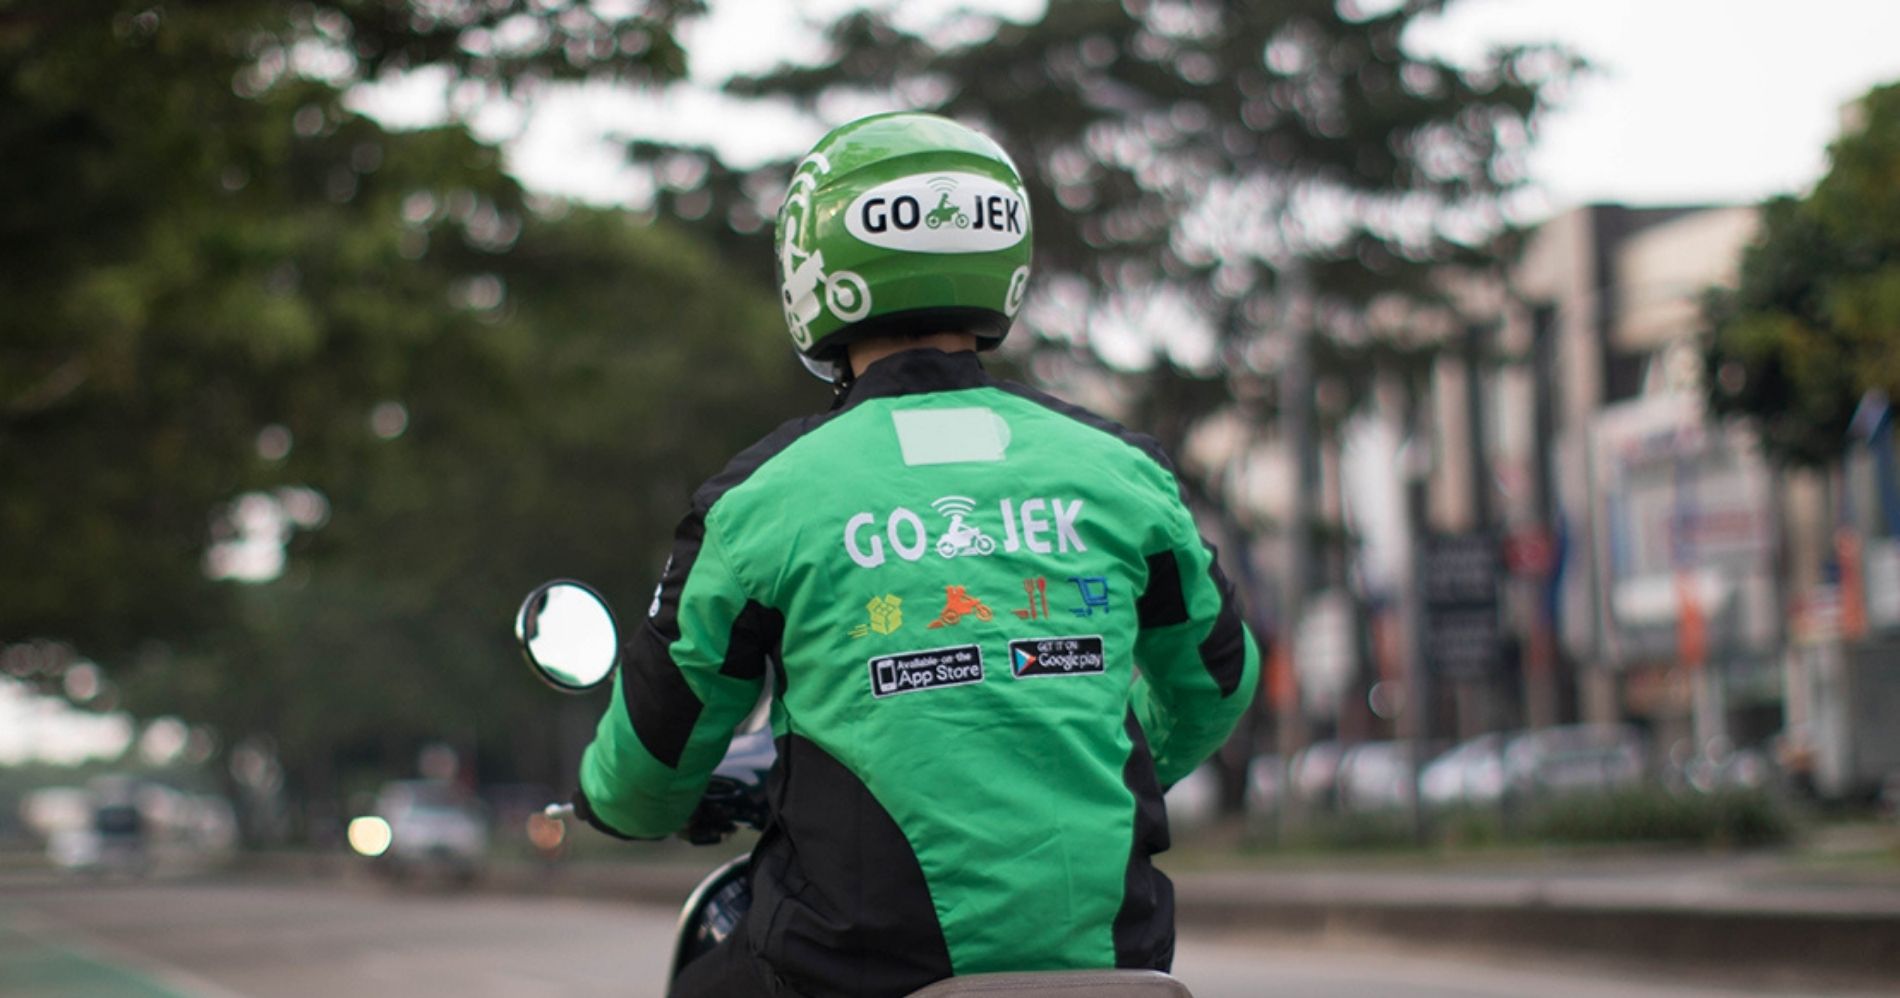 Driver Gojek - Image: Gojek